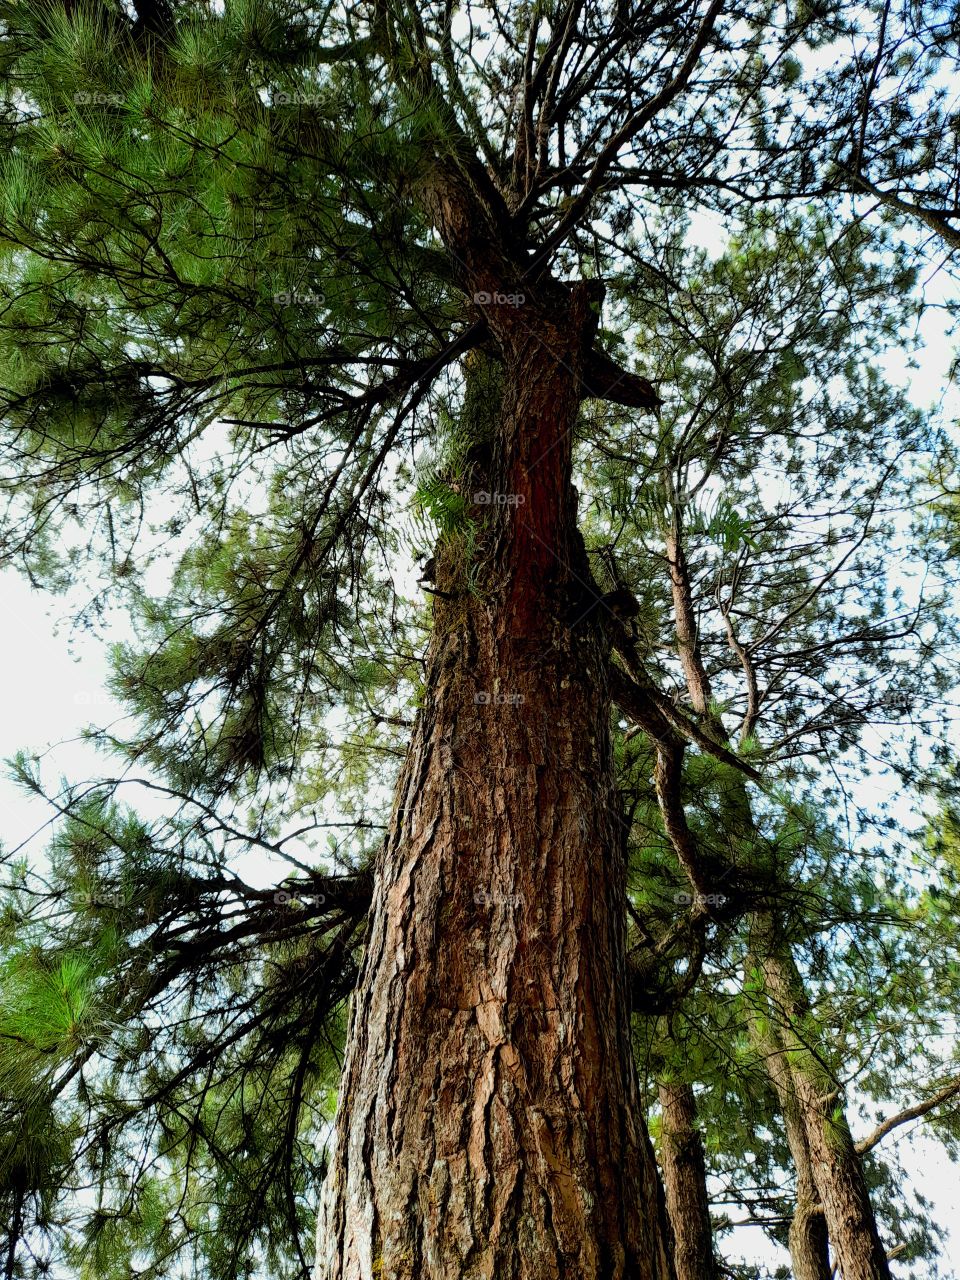 The tall pine tree.